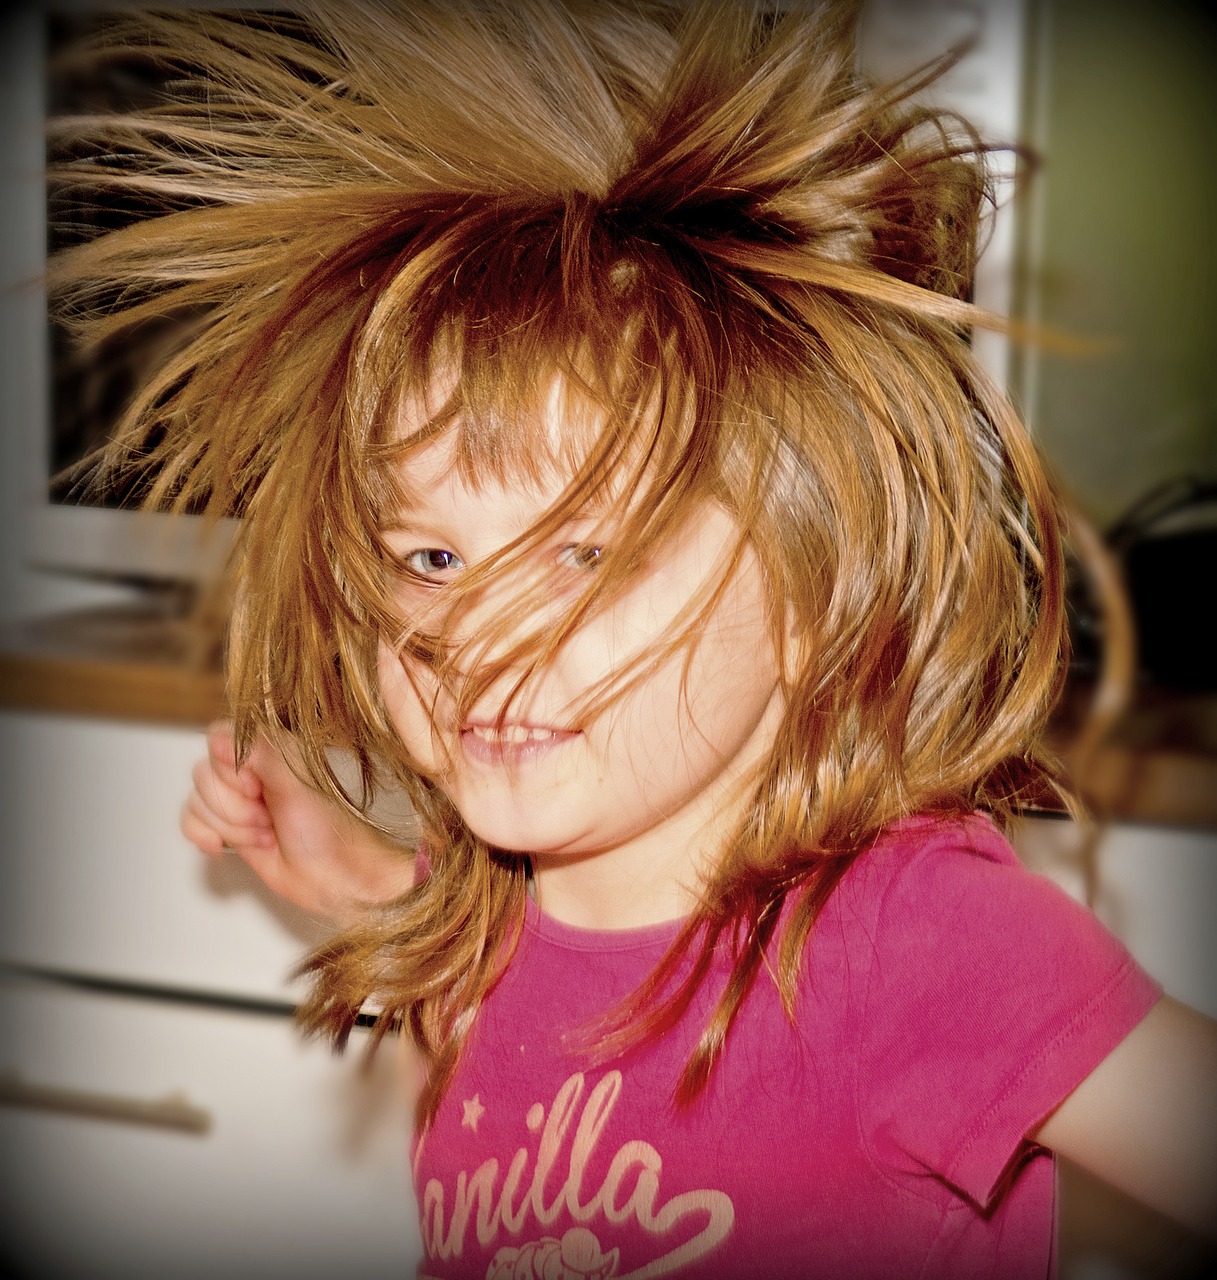 Image - child dance hair wild girl human